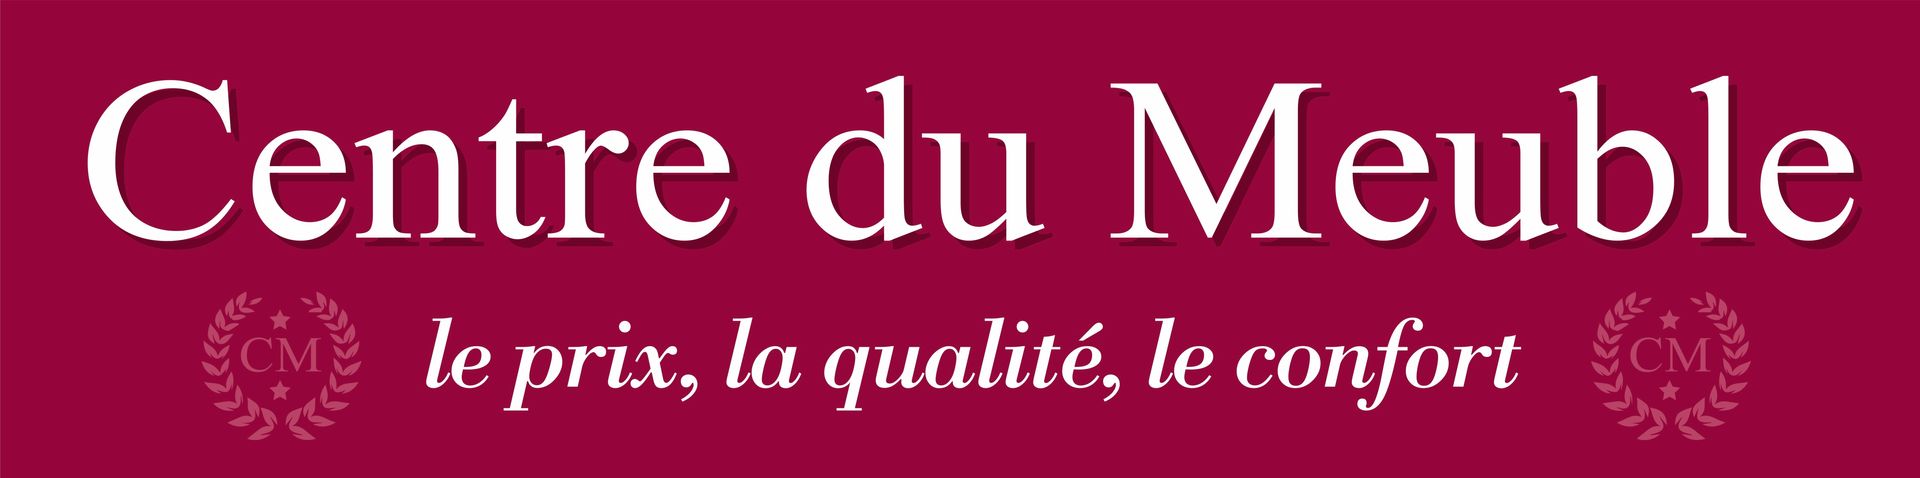 Logo Centre du Meuble